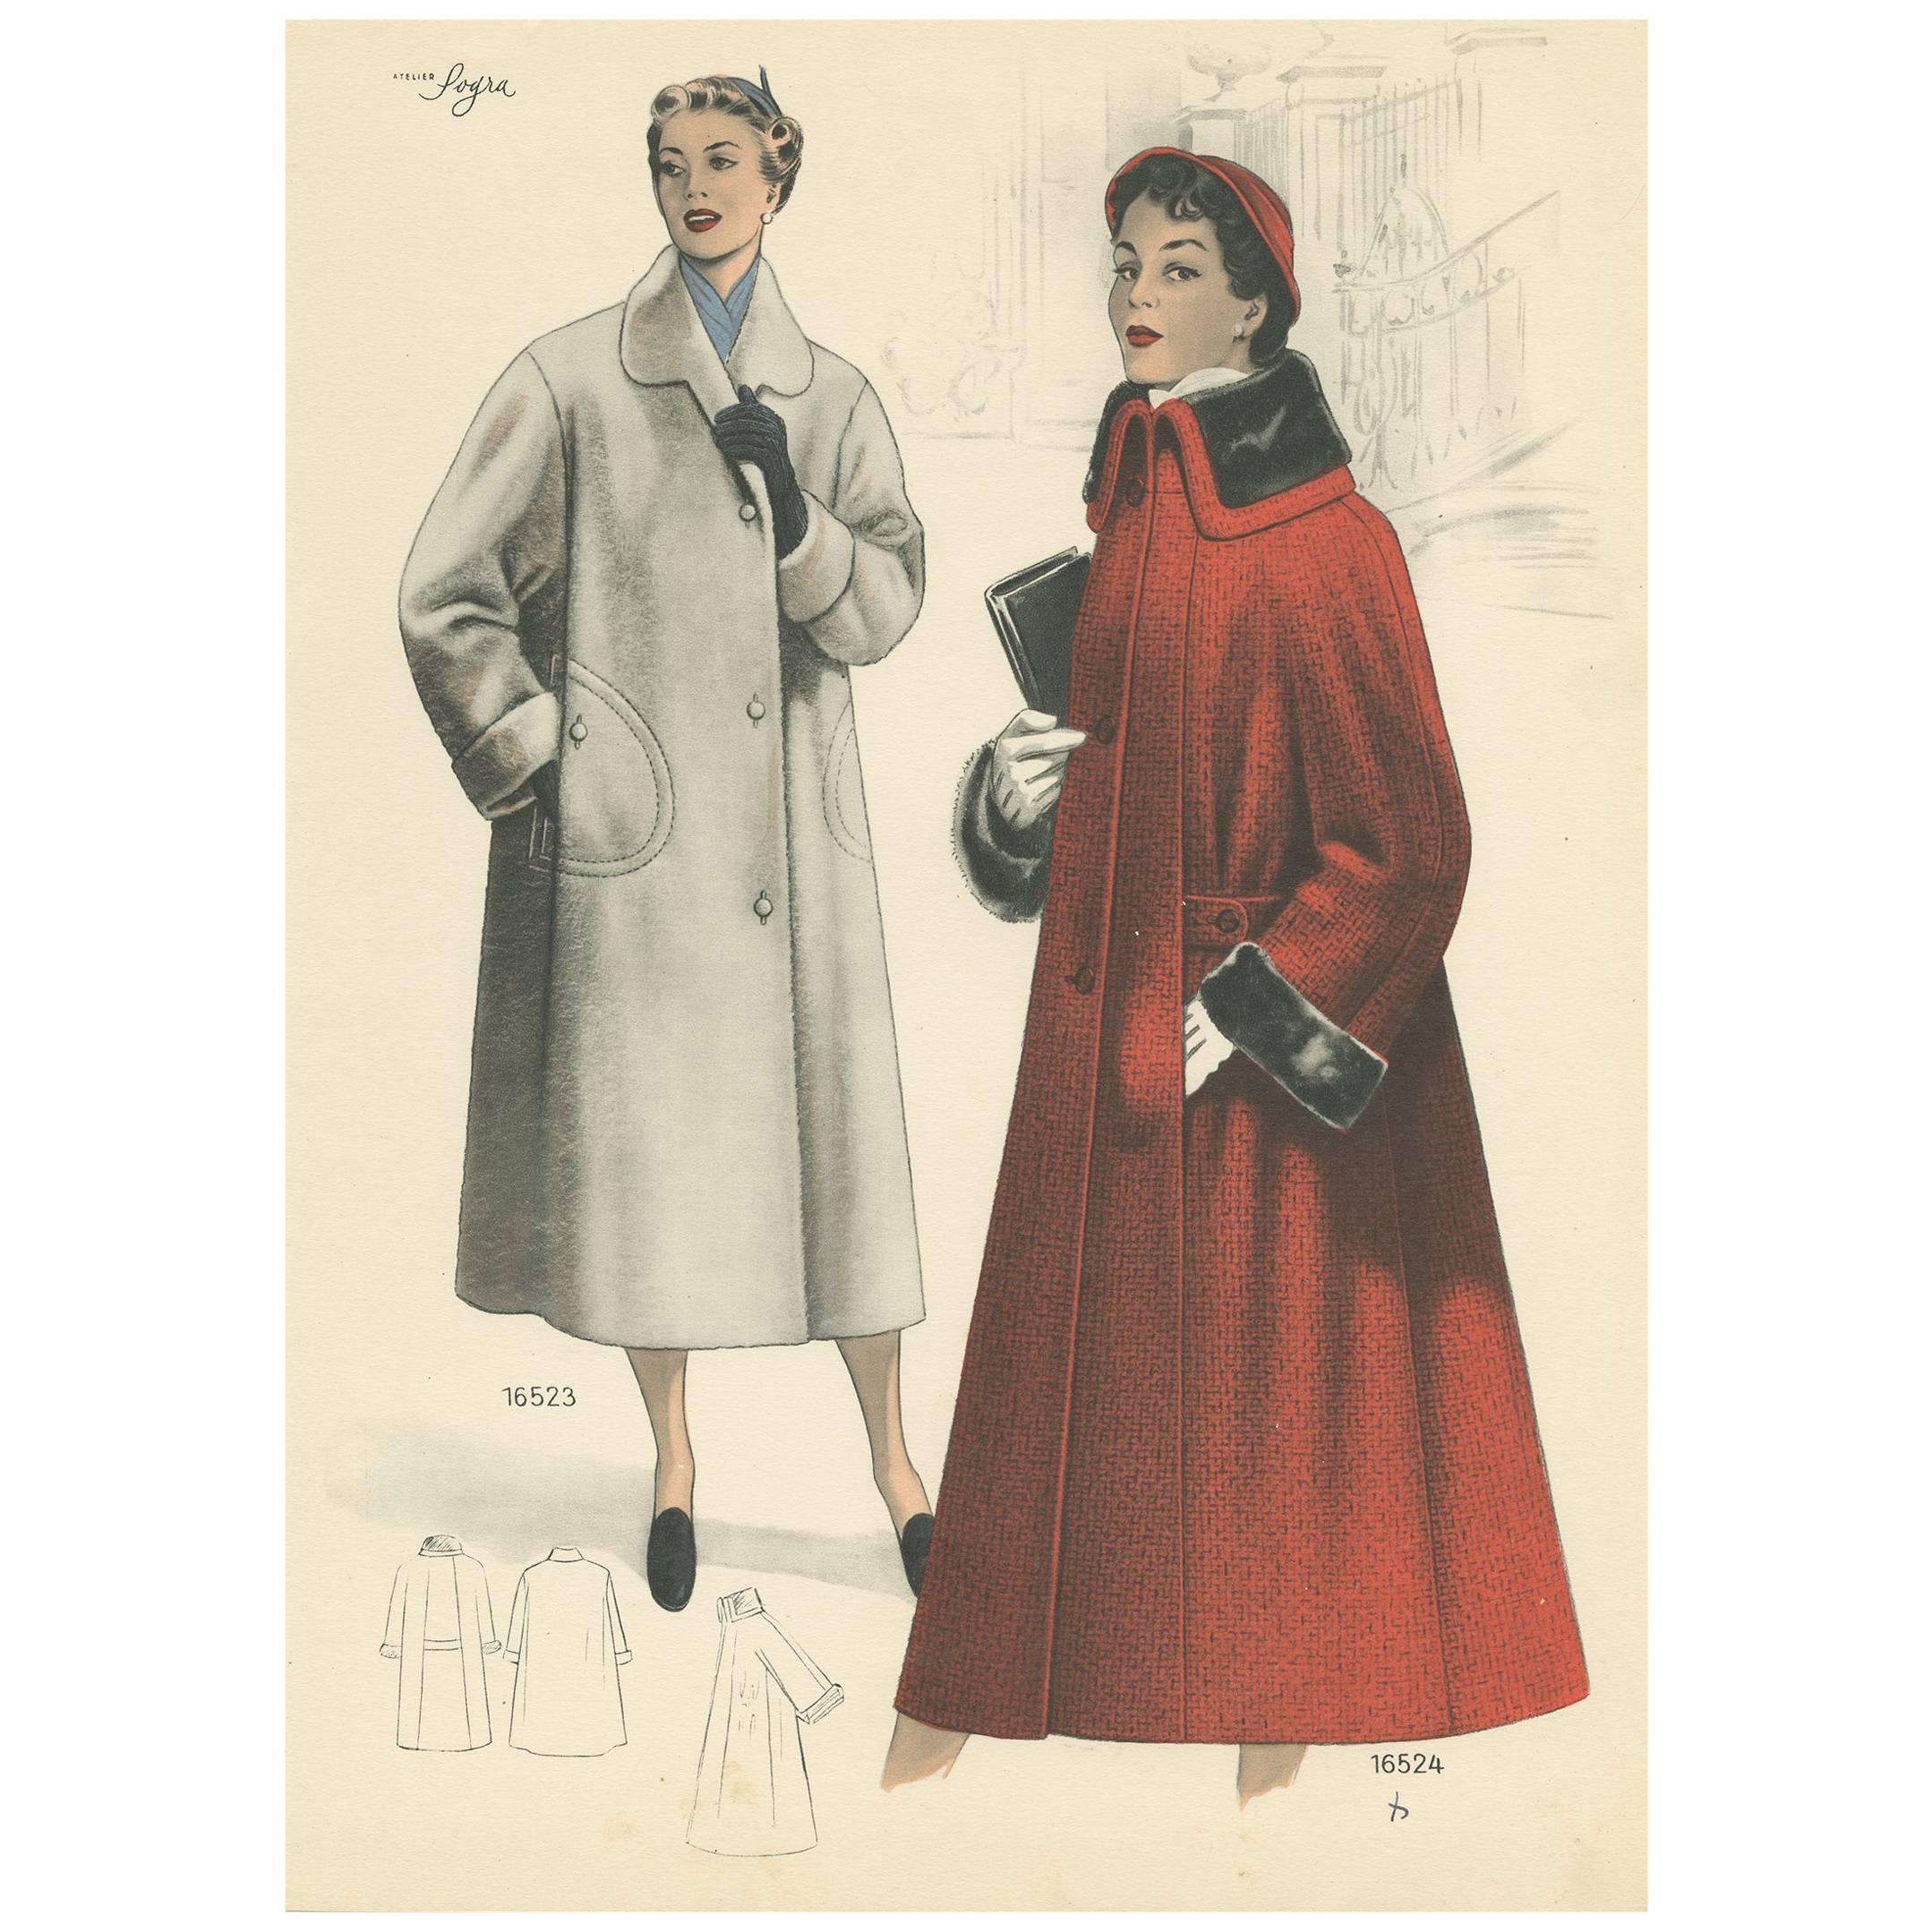 Vintage Fashion Print 'Pl. 16523' published in Le Tailleur Moderne, 1954